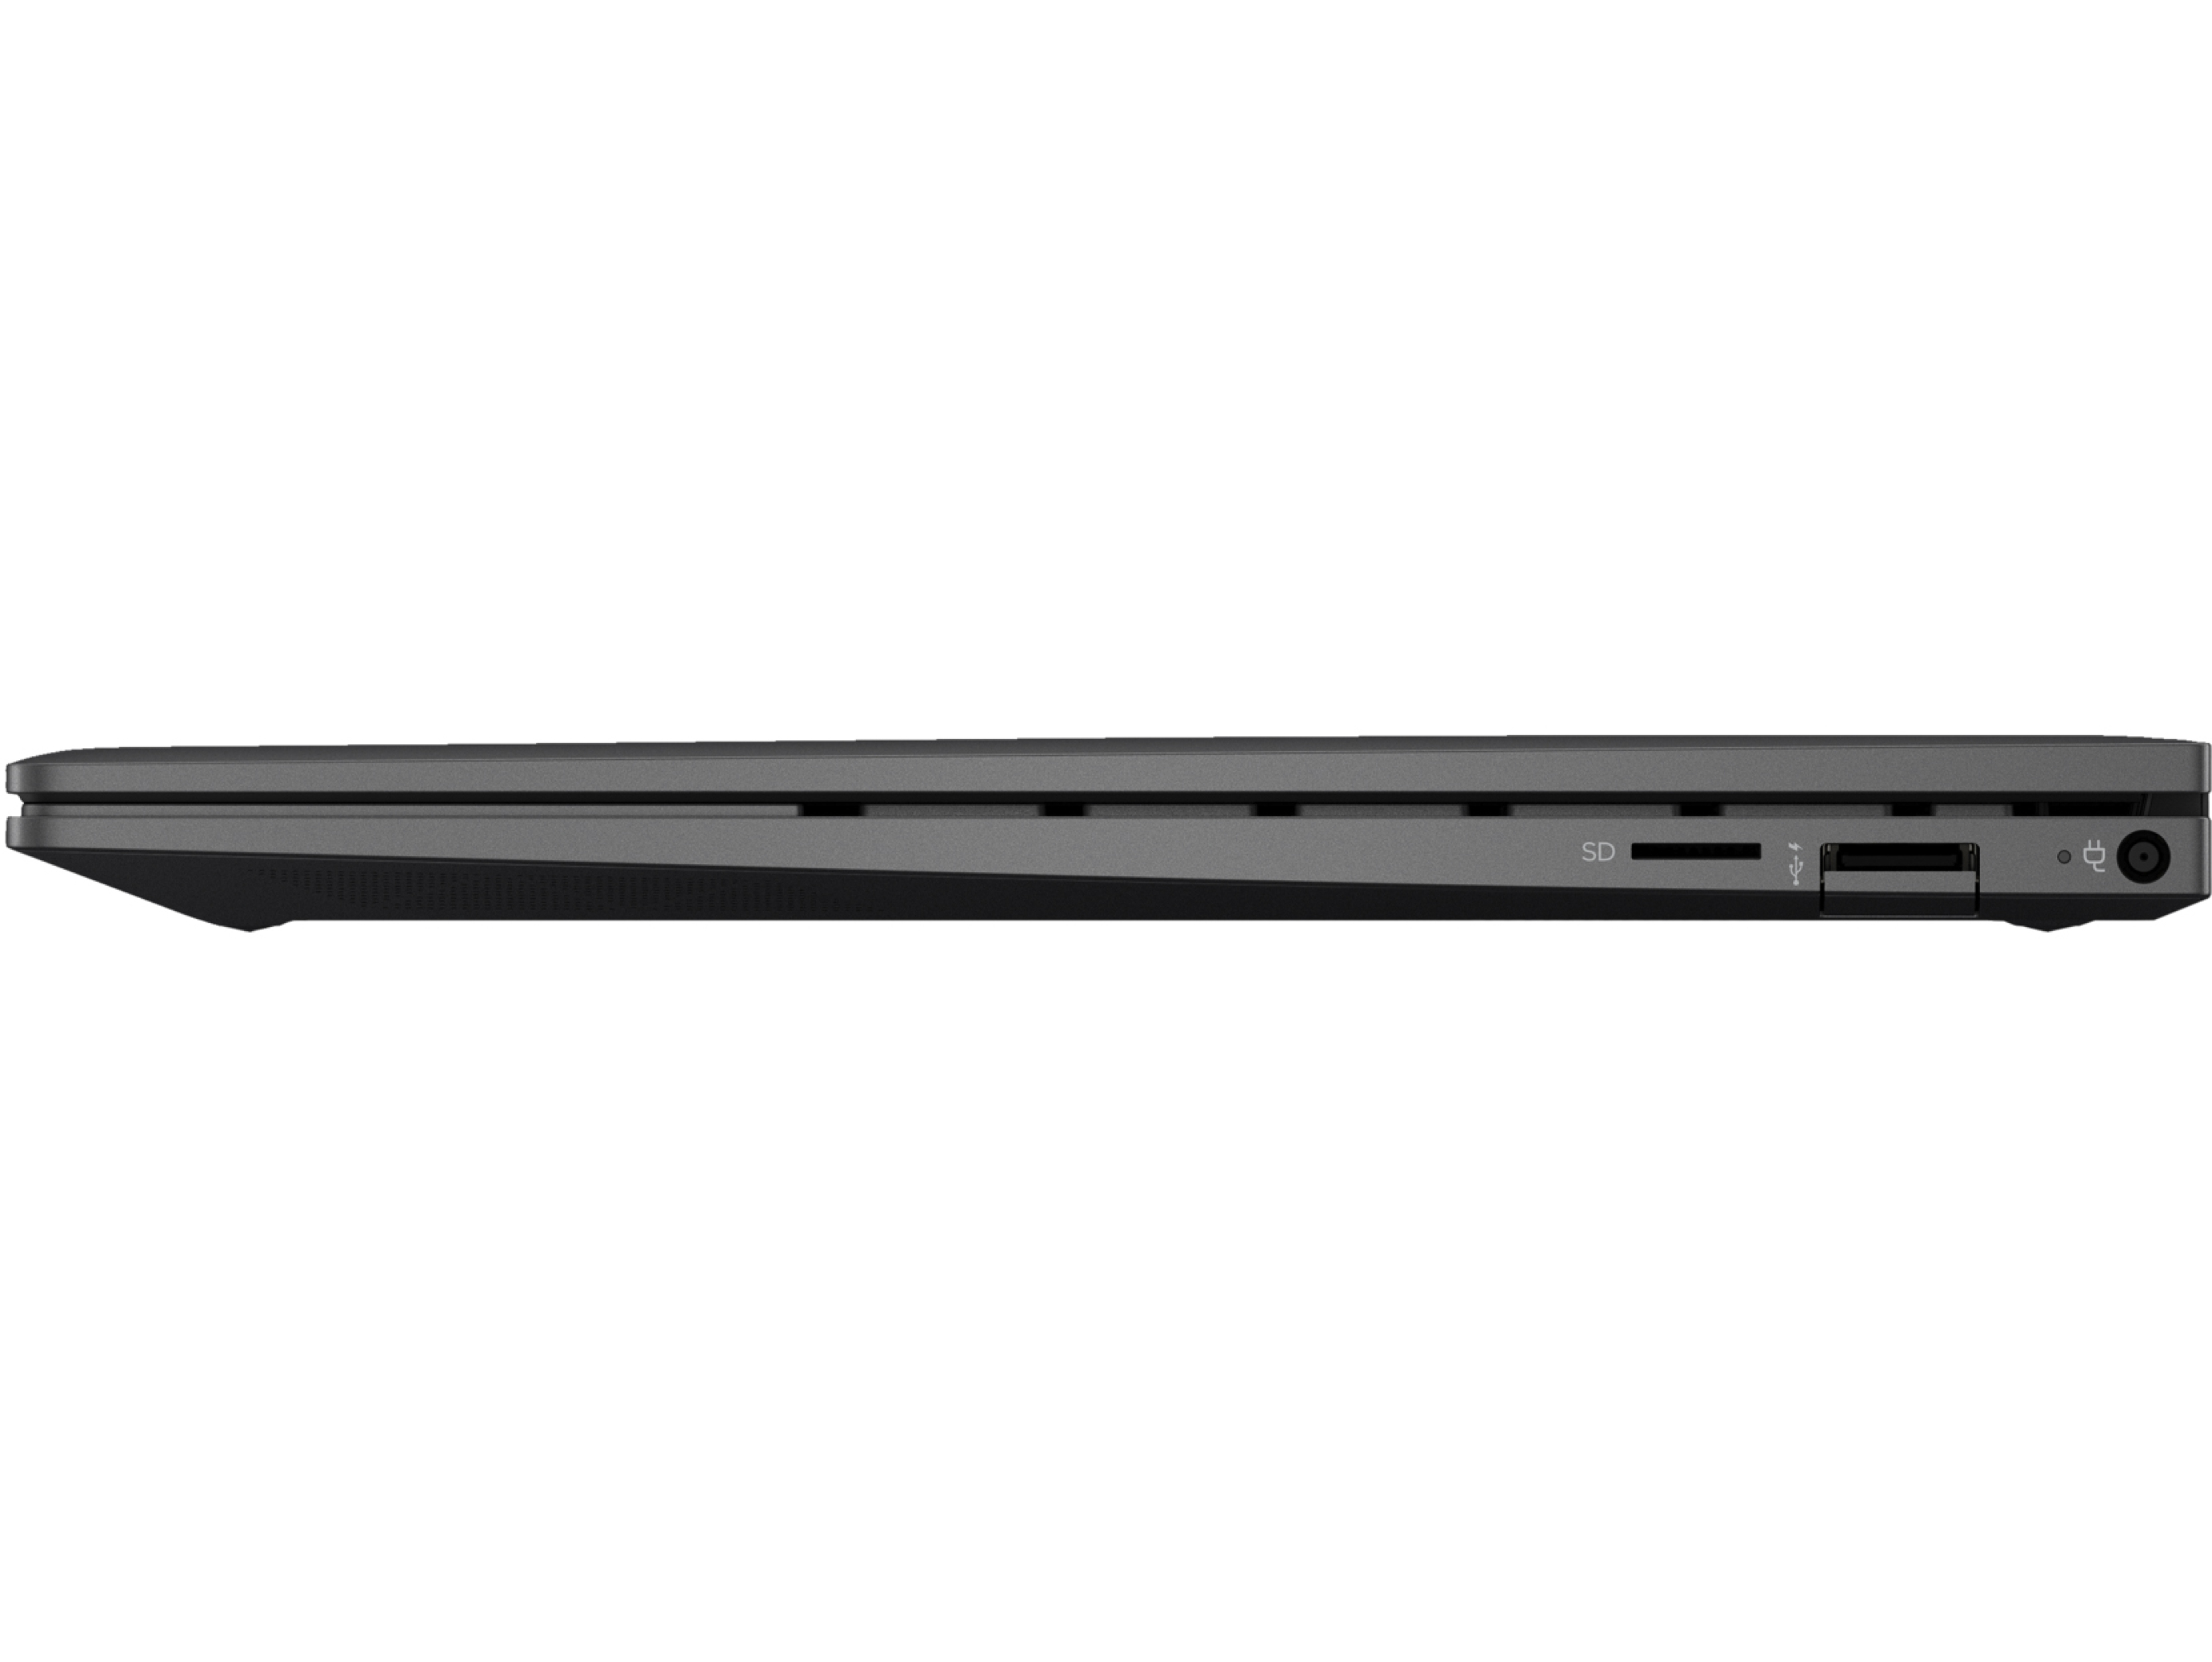  لپ تاپ کانورتیبل HP ENVY 13 X360 نمایشگر 13.3 اینچی FHD لمسی و 360 درجه - رایزن 7 | لاکچری لپ تاپ 